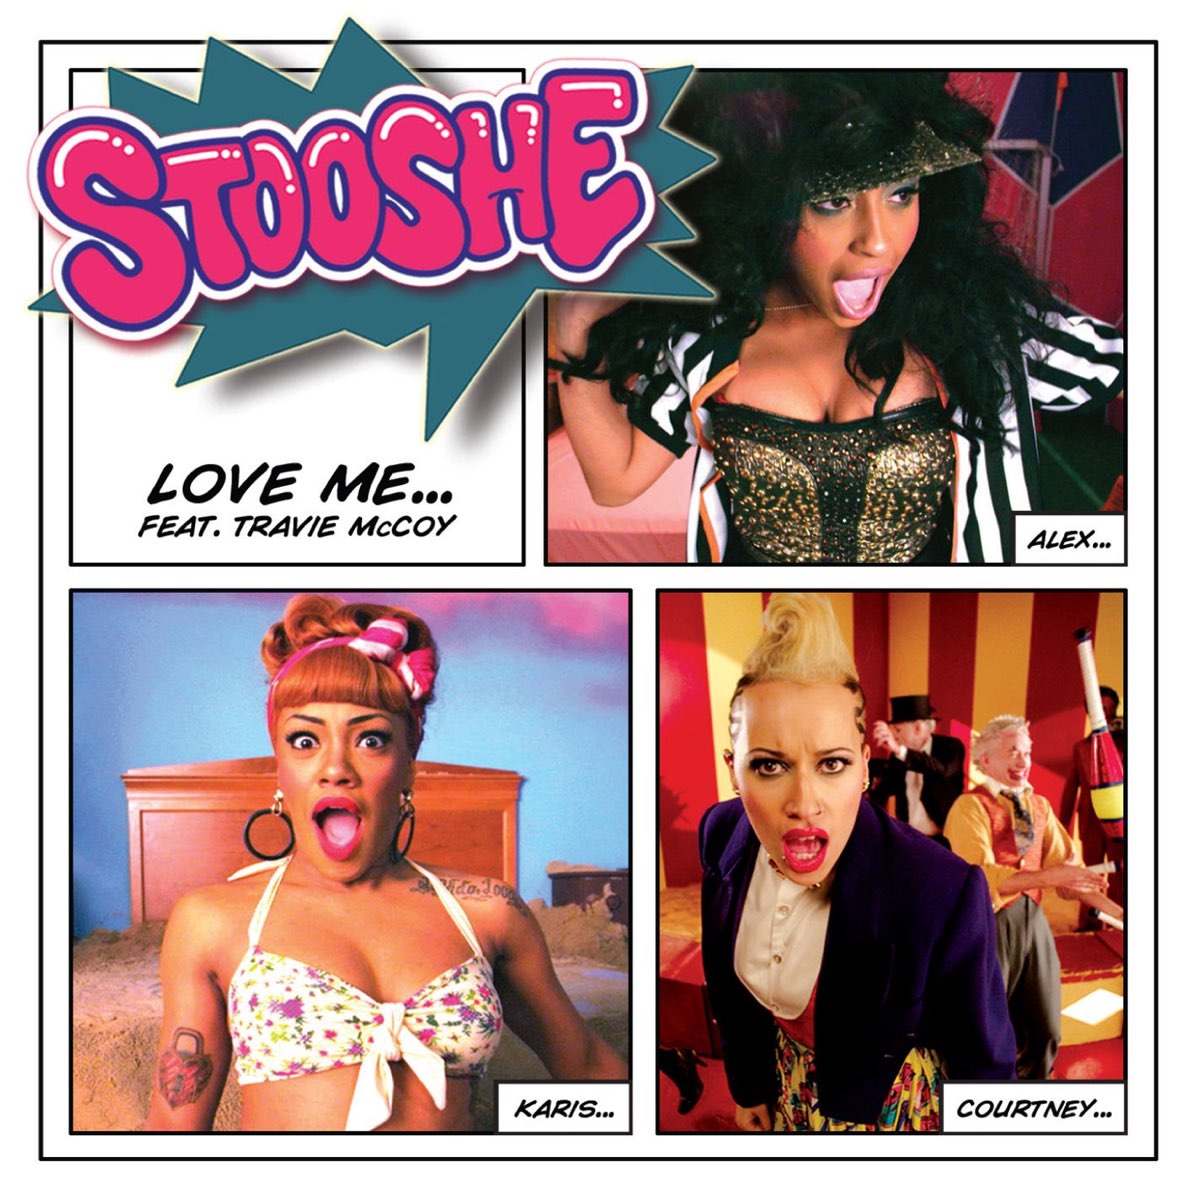 Stooshe featuring Travie McCoy — Love Me cover artwork